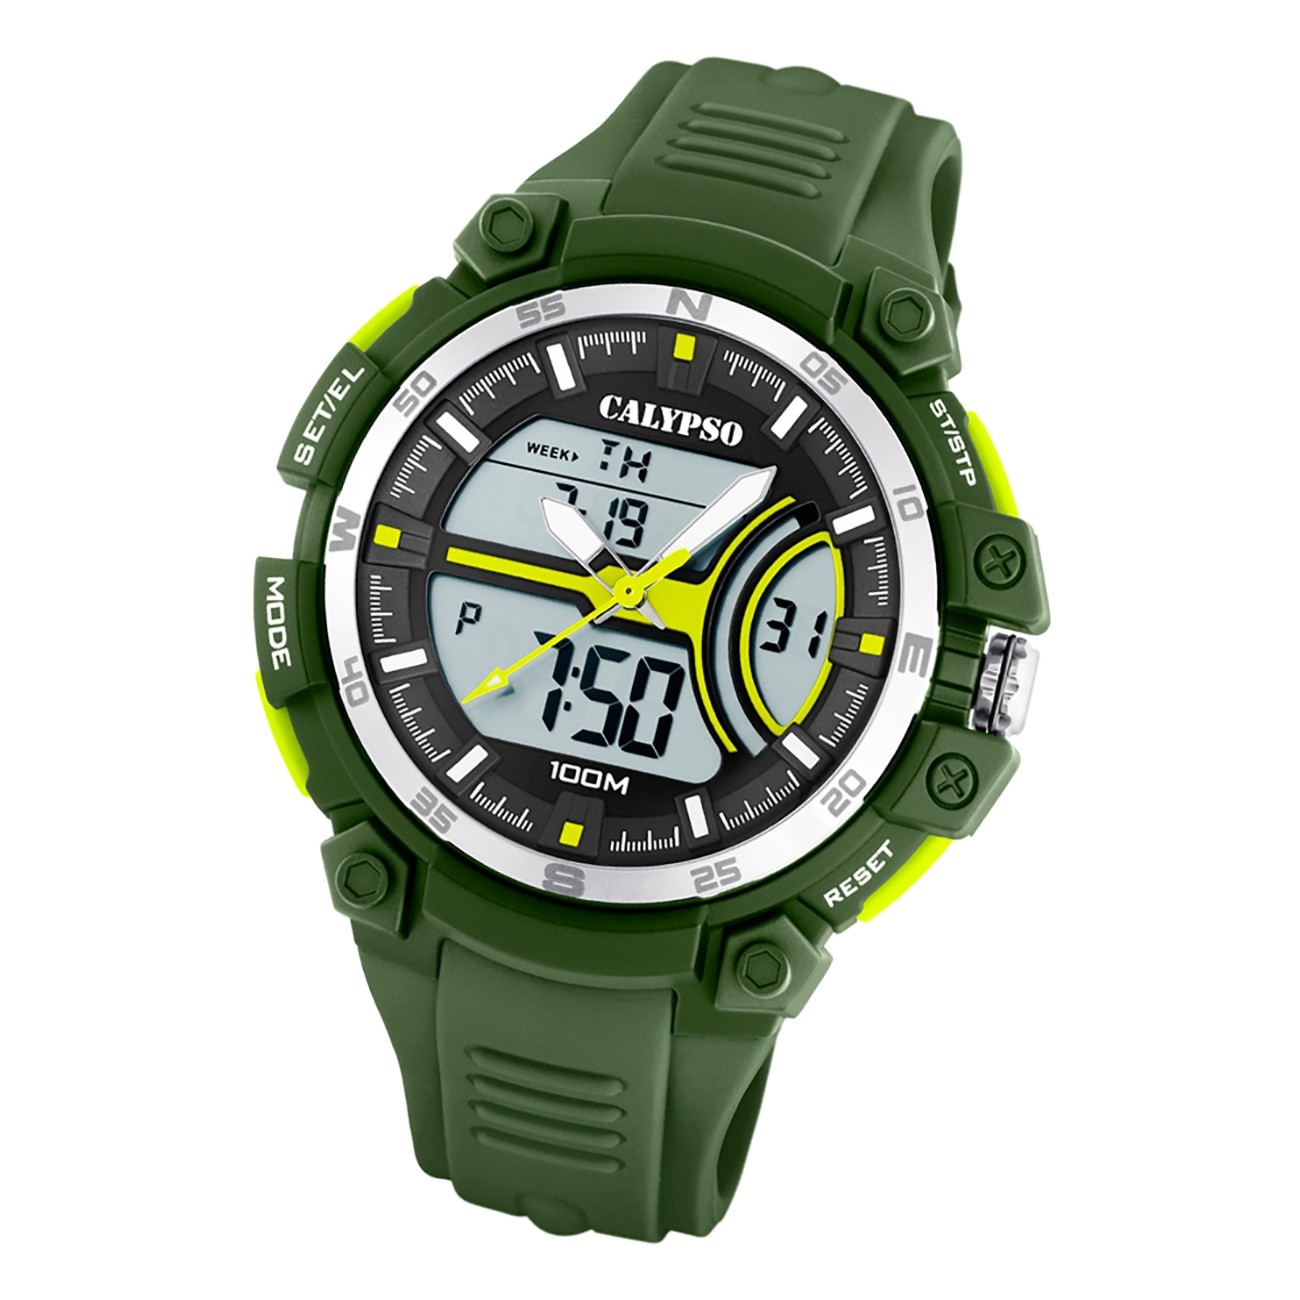 Calypso Herren Jugend Armbanduhr K5779/4 Analog-Digital Kunststoff grün UK5779/4